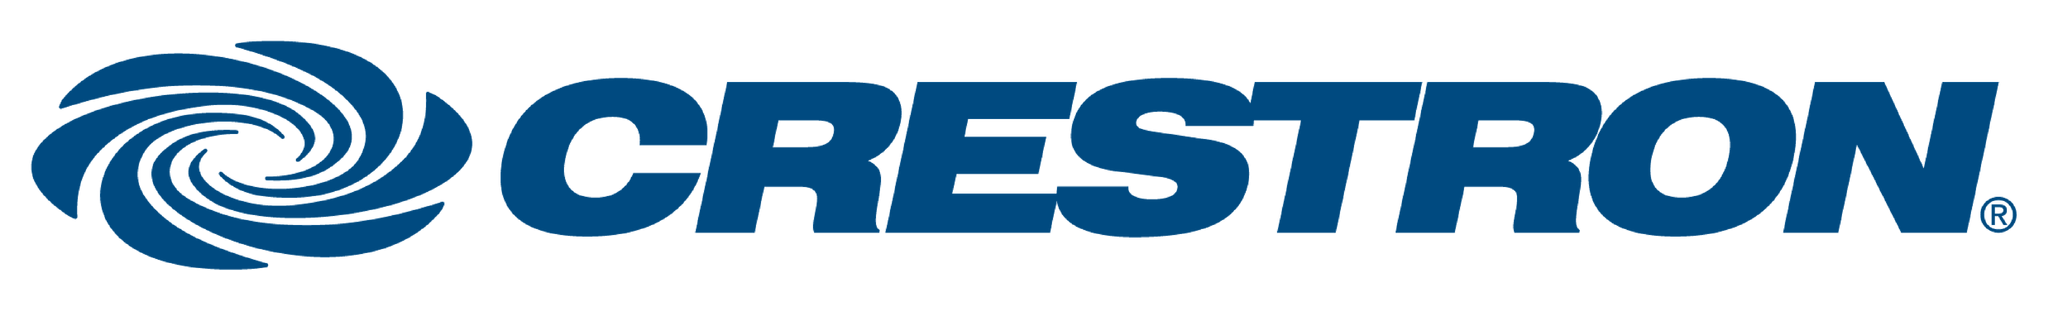 crestron-logo.png